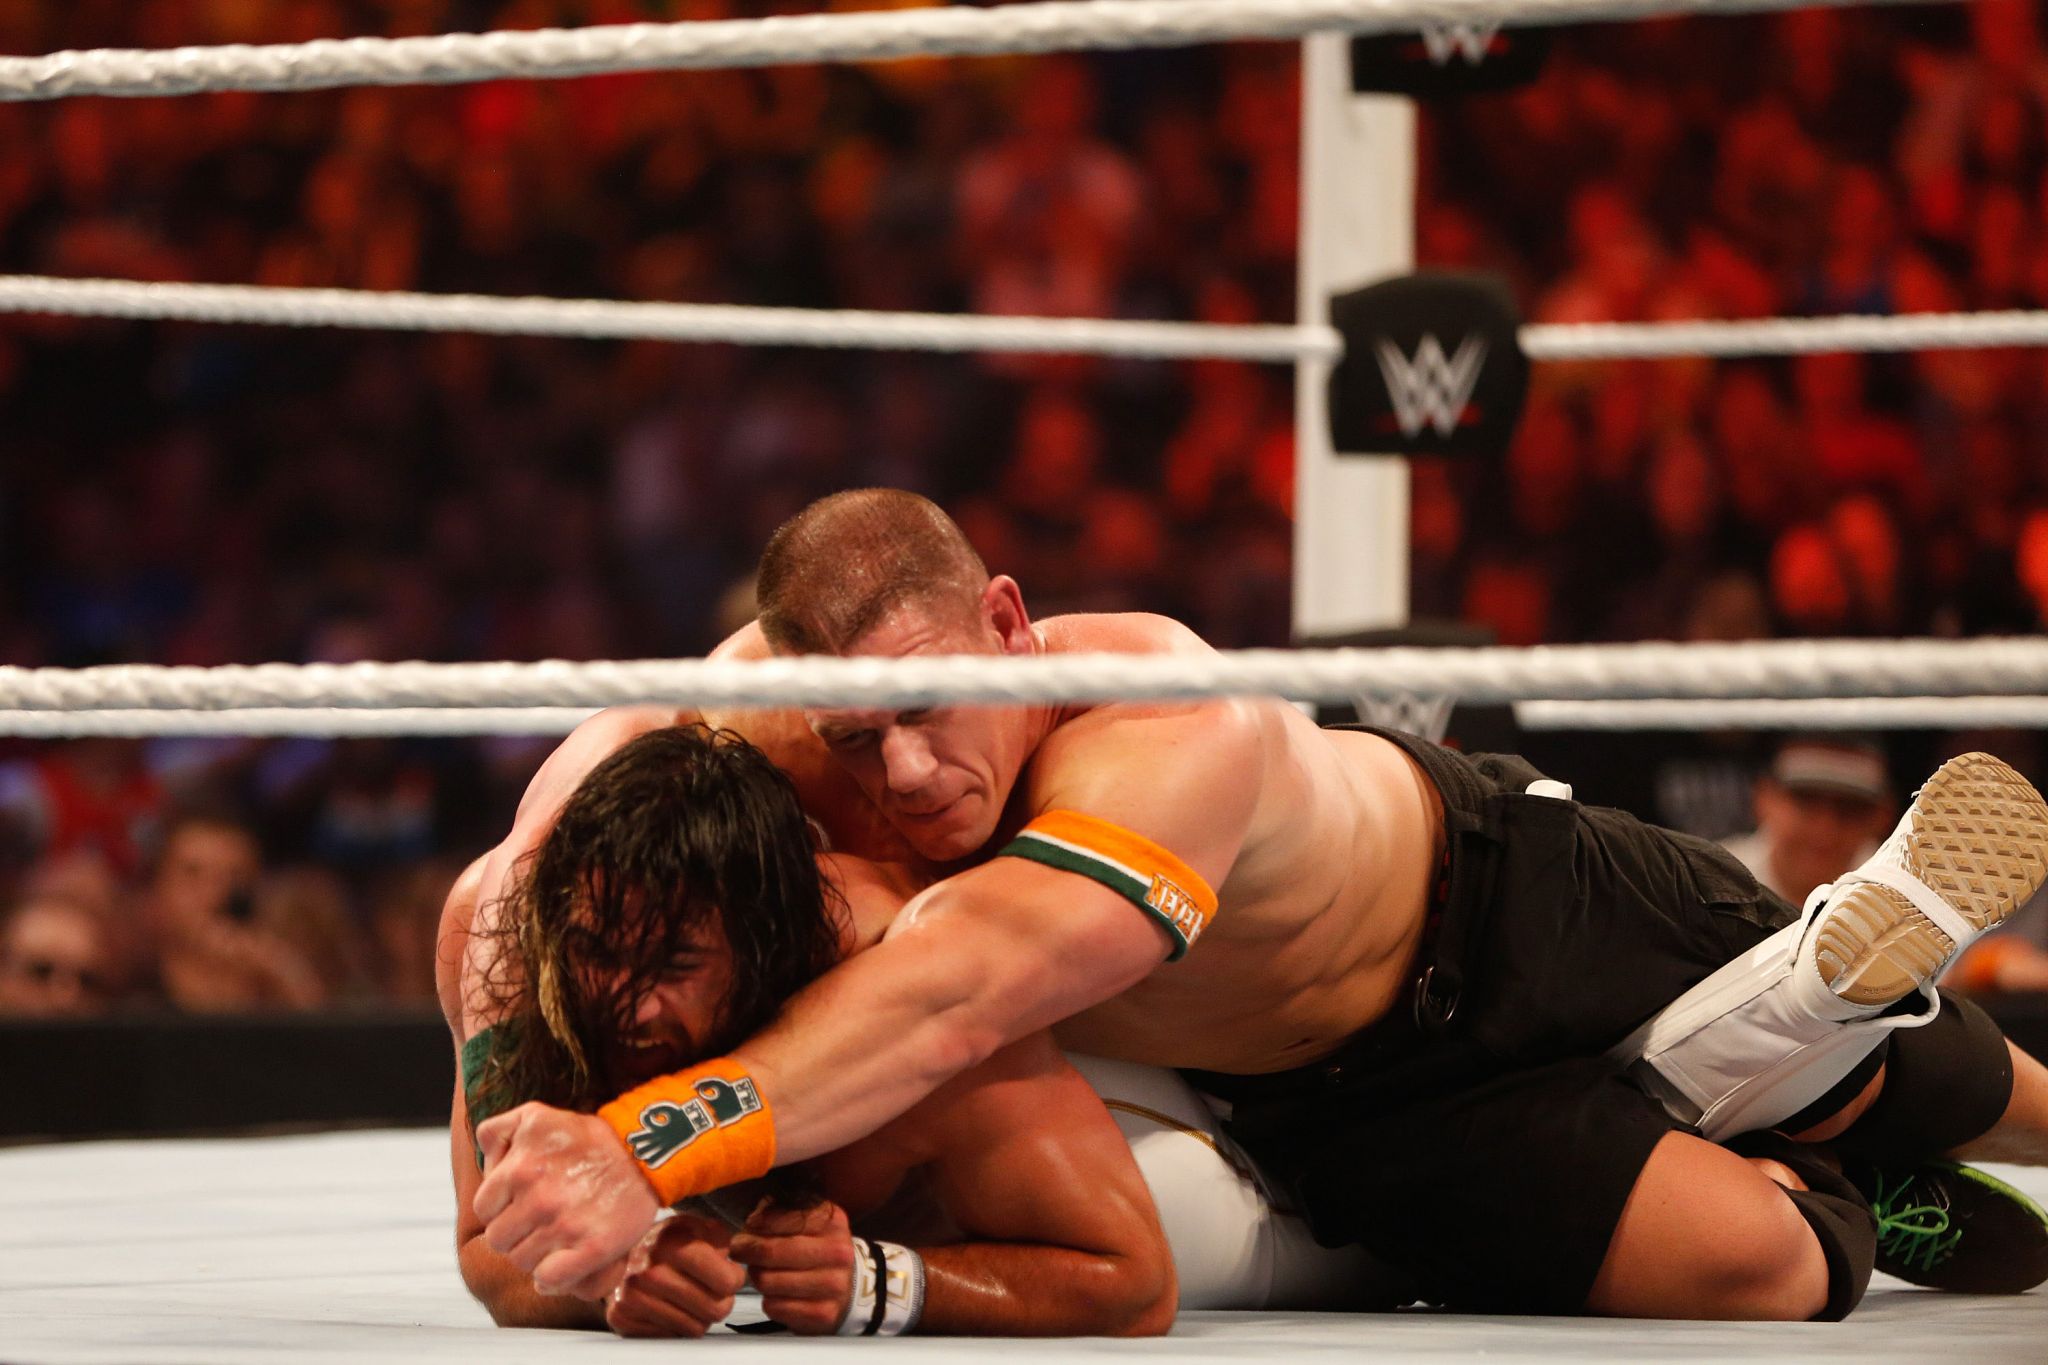 The Transformation Of Entertainment Wrestler John Cena